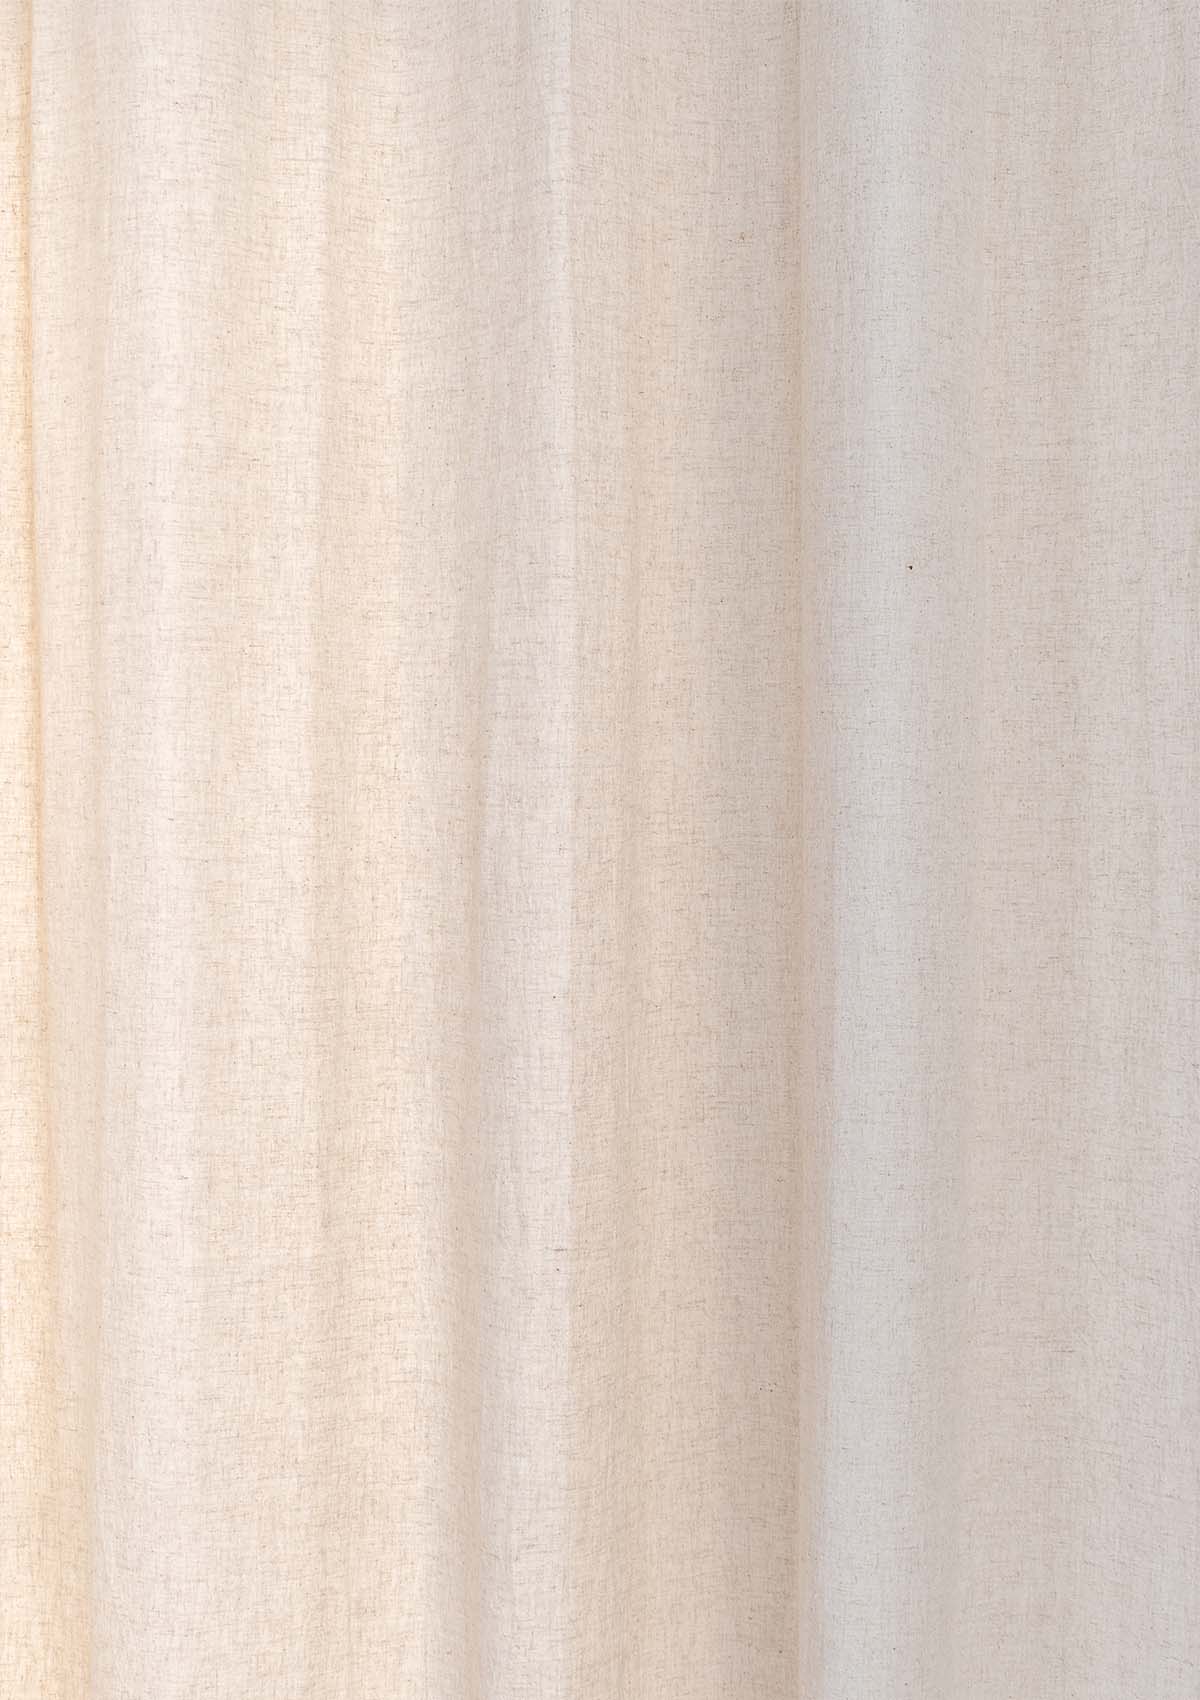 Solid linen Beige 100% Customizable Cotton plain curtain for bedroom - Room darkening